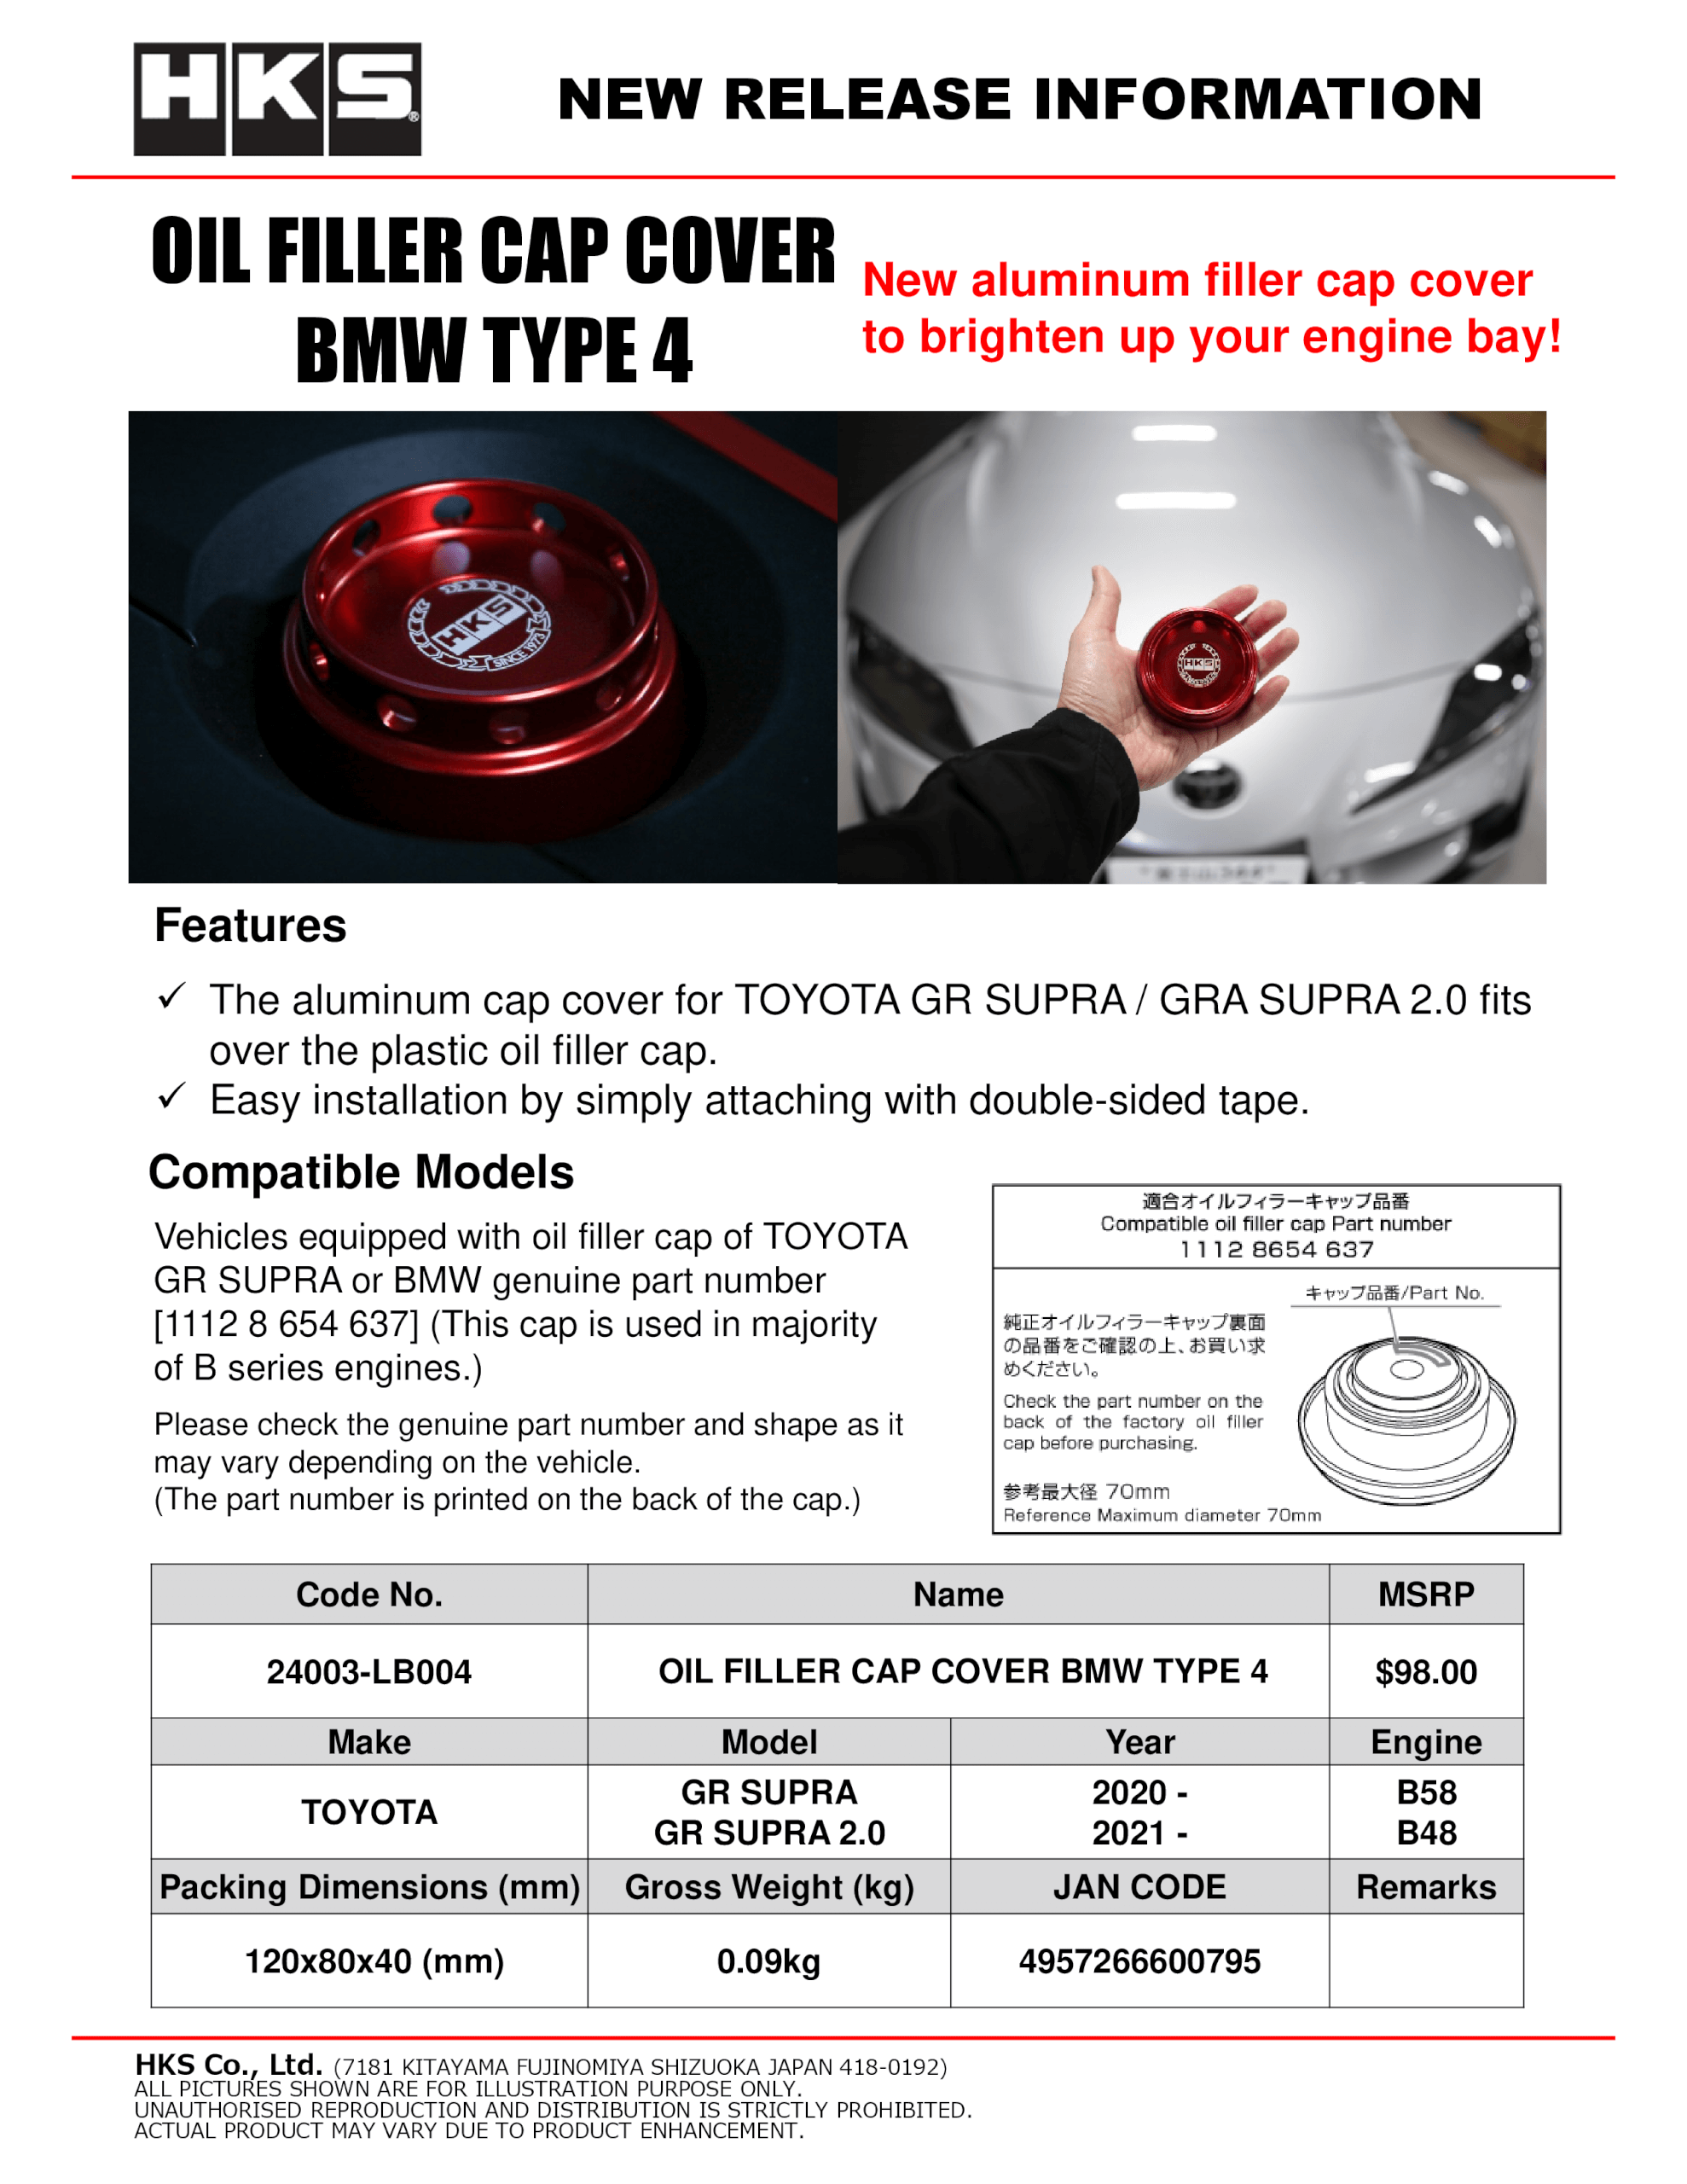 24003-LB004_OIL FILLER CAP COVER BMW TYPE 4.png